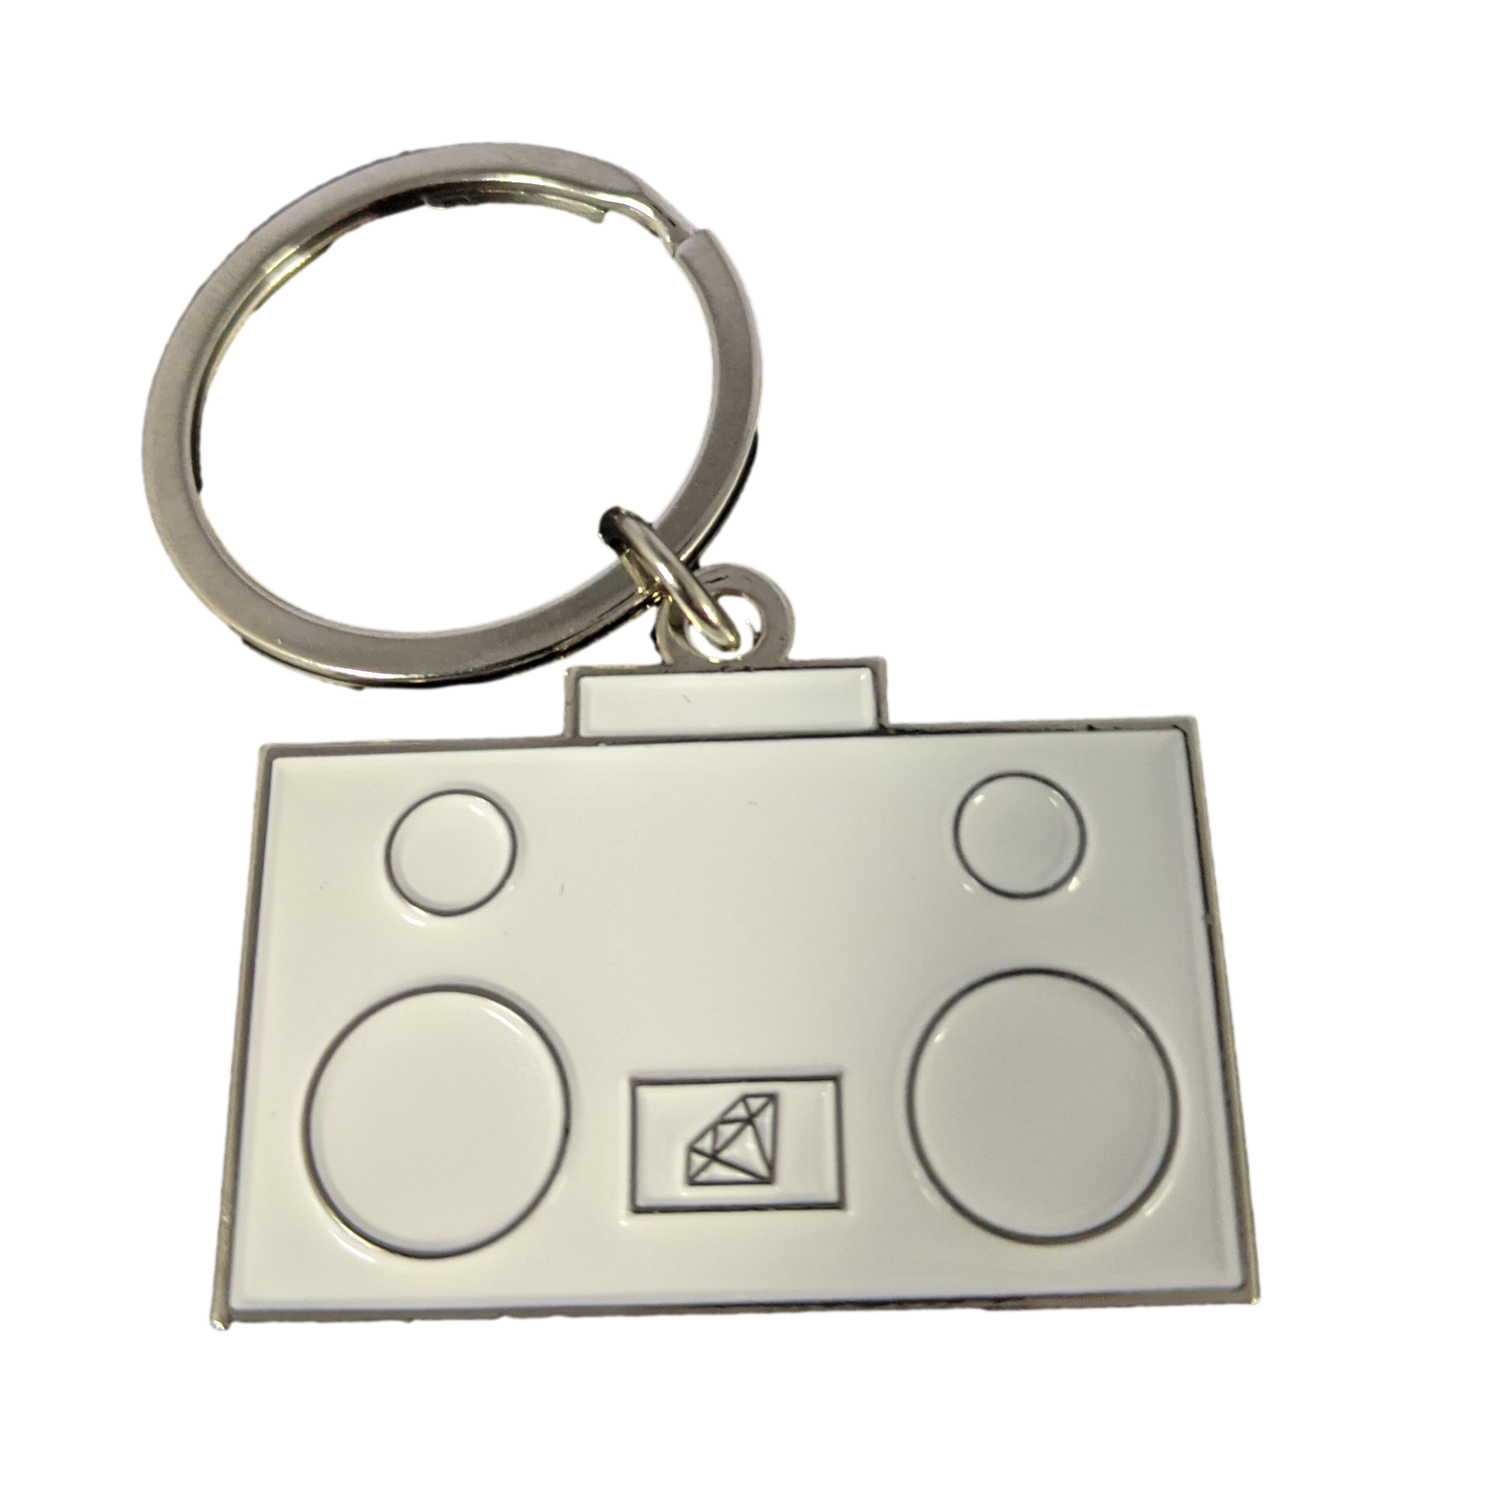 DiamondBoxx White keychain front